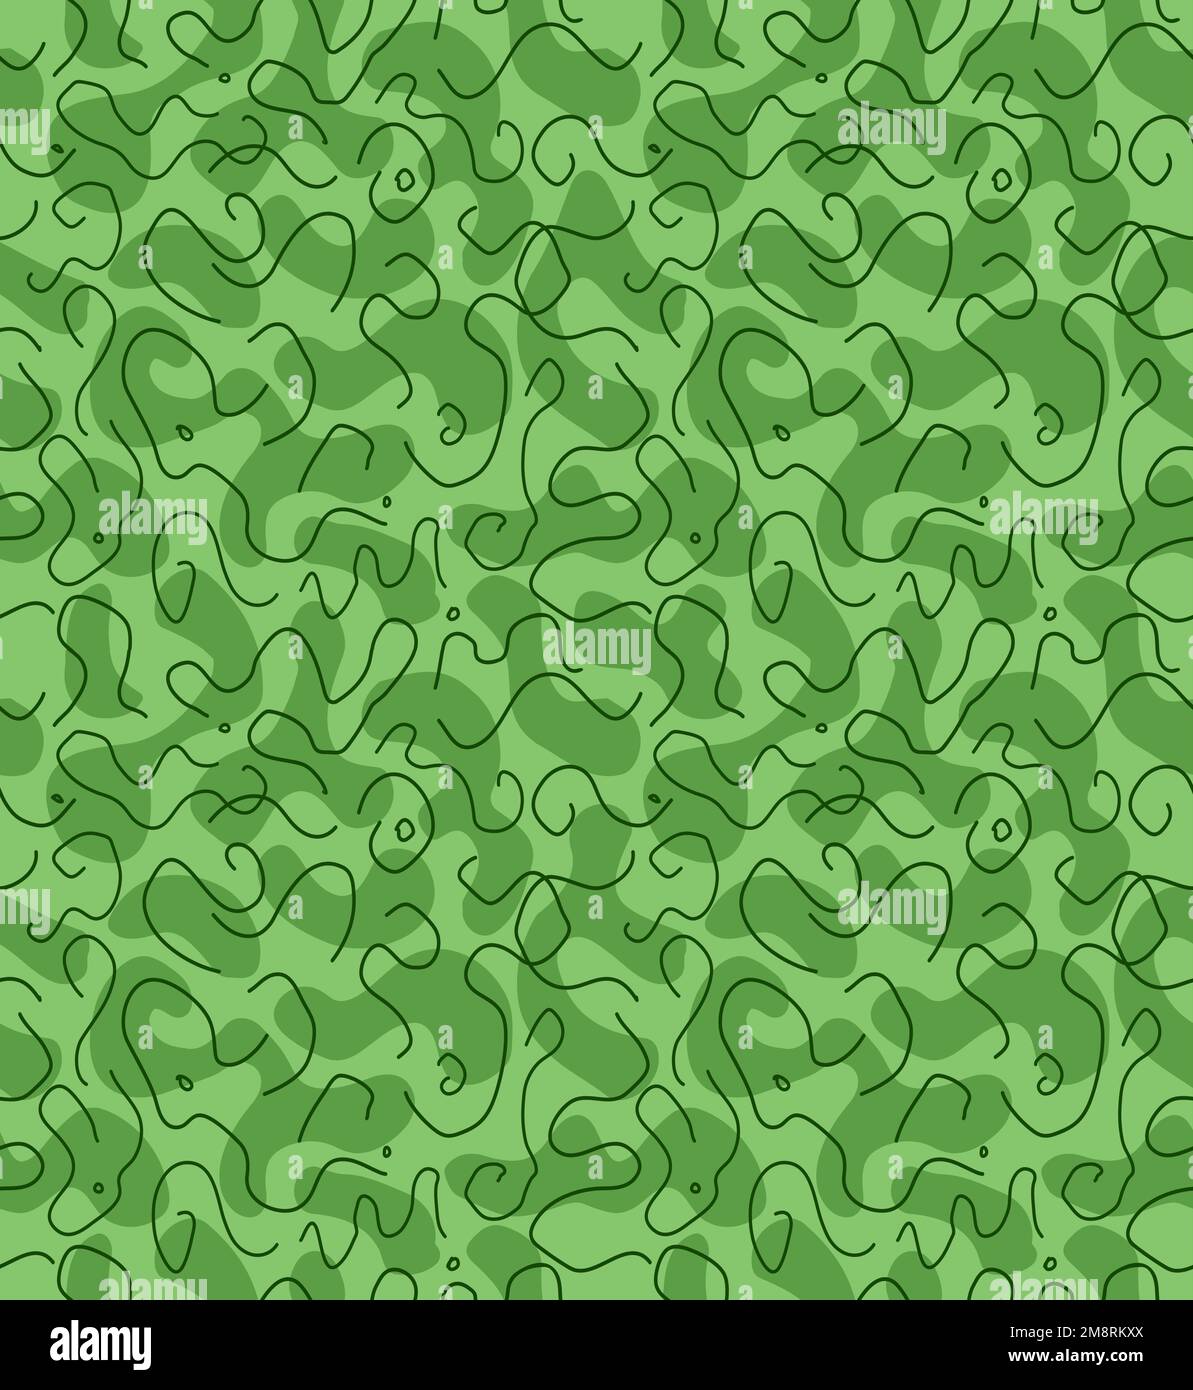 Armeegrün Camouflage Nahtloses Muster Art. Vektorlinien-Illustrationsdesign Tapete. Armeegrün Camouflage Mode Nahtloses Muster Hintergrundkonzept Stock Vektor